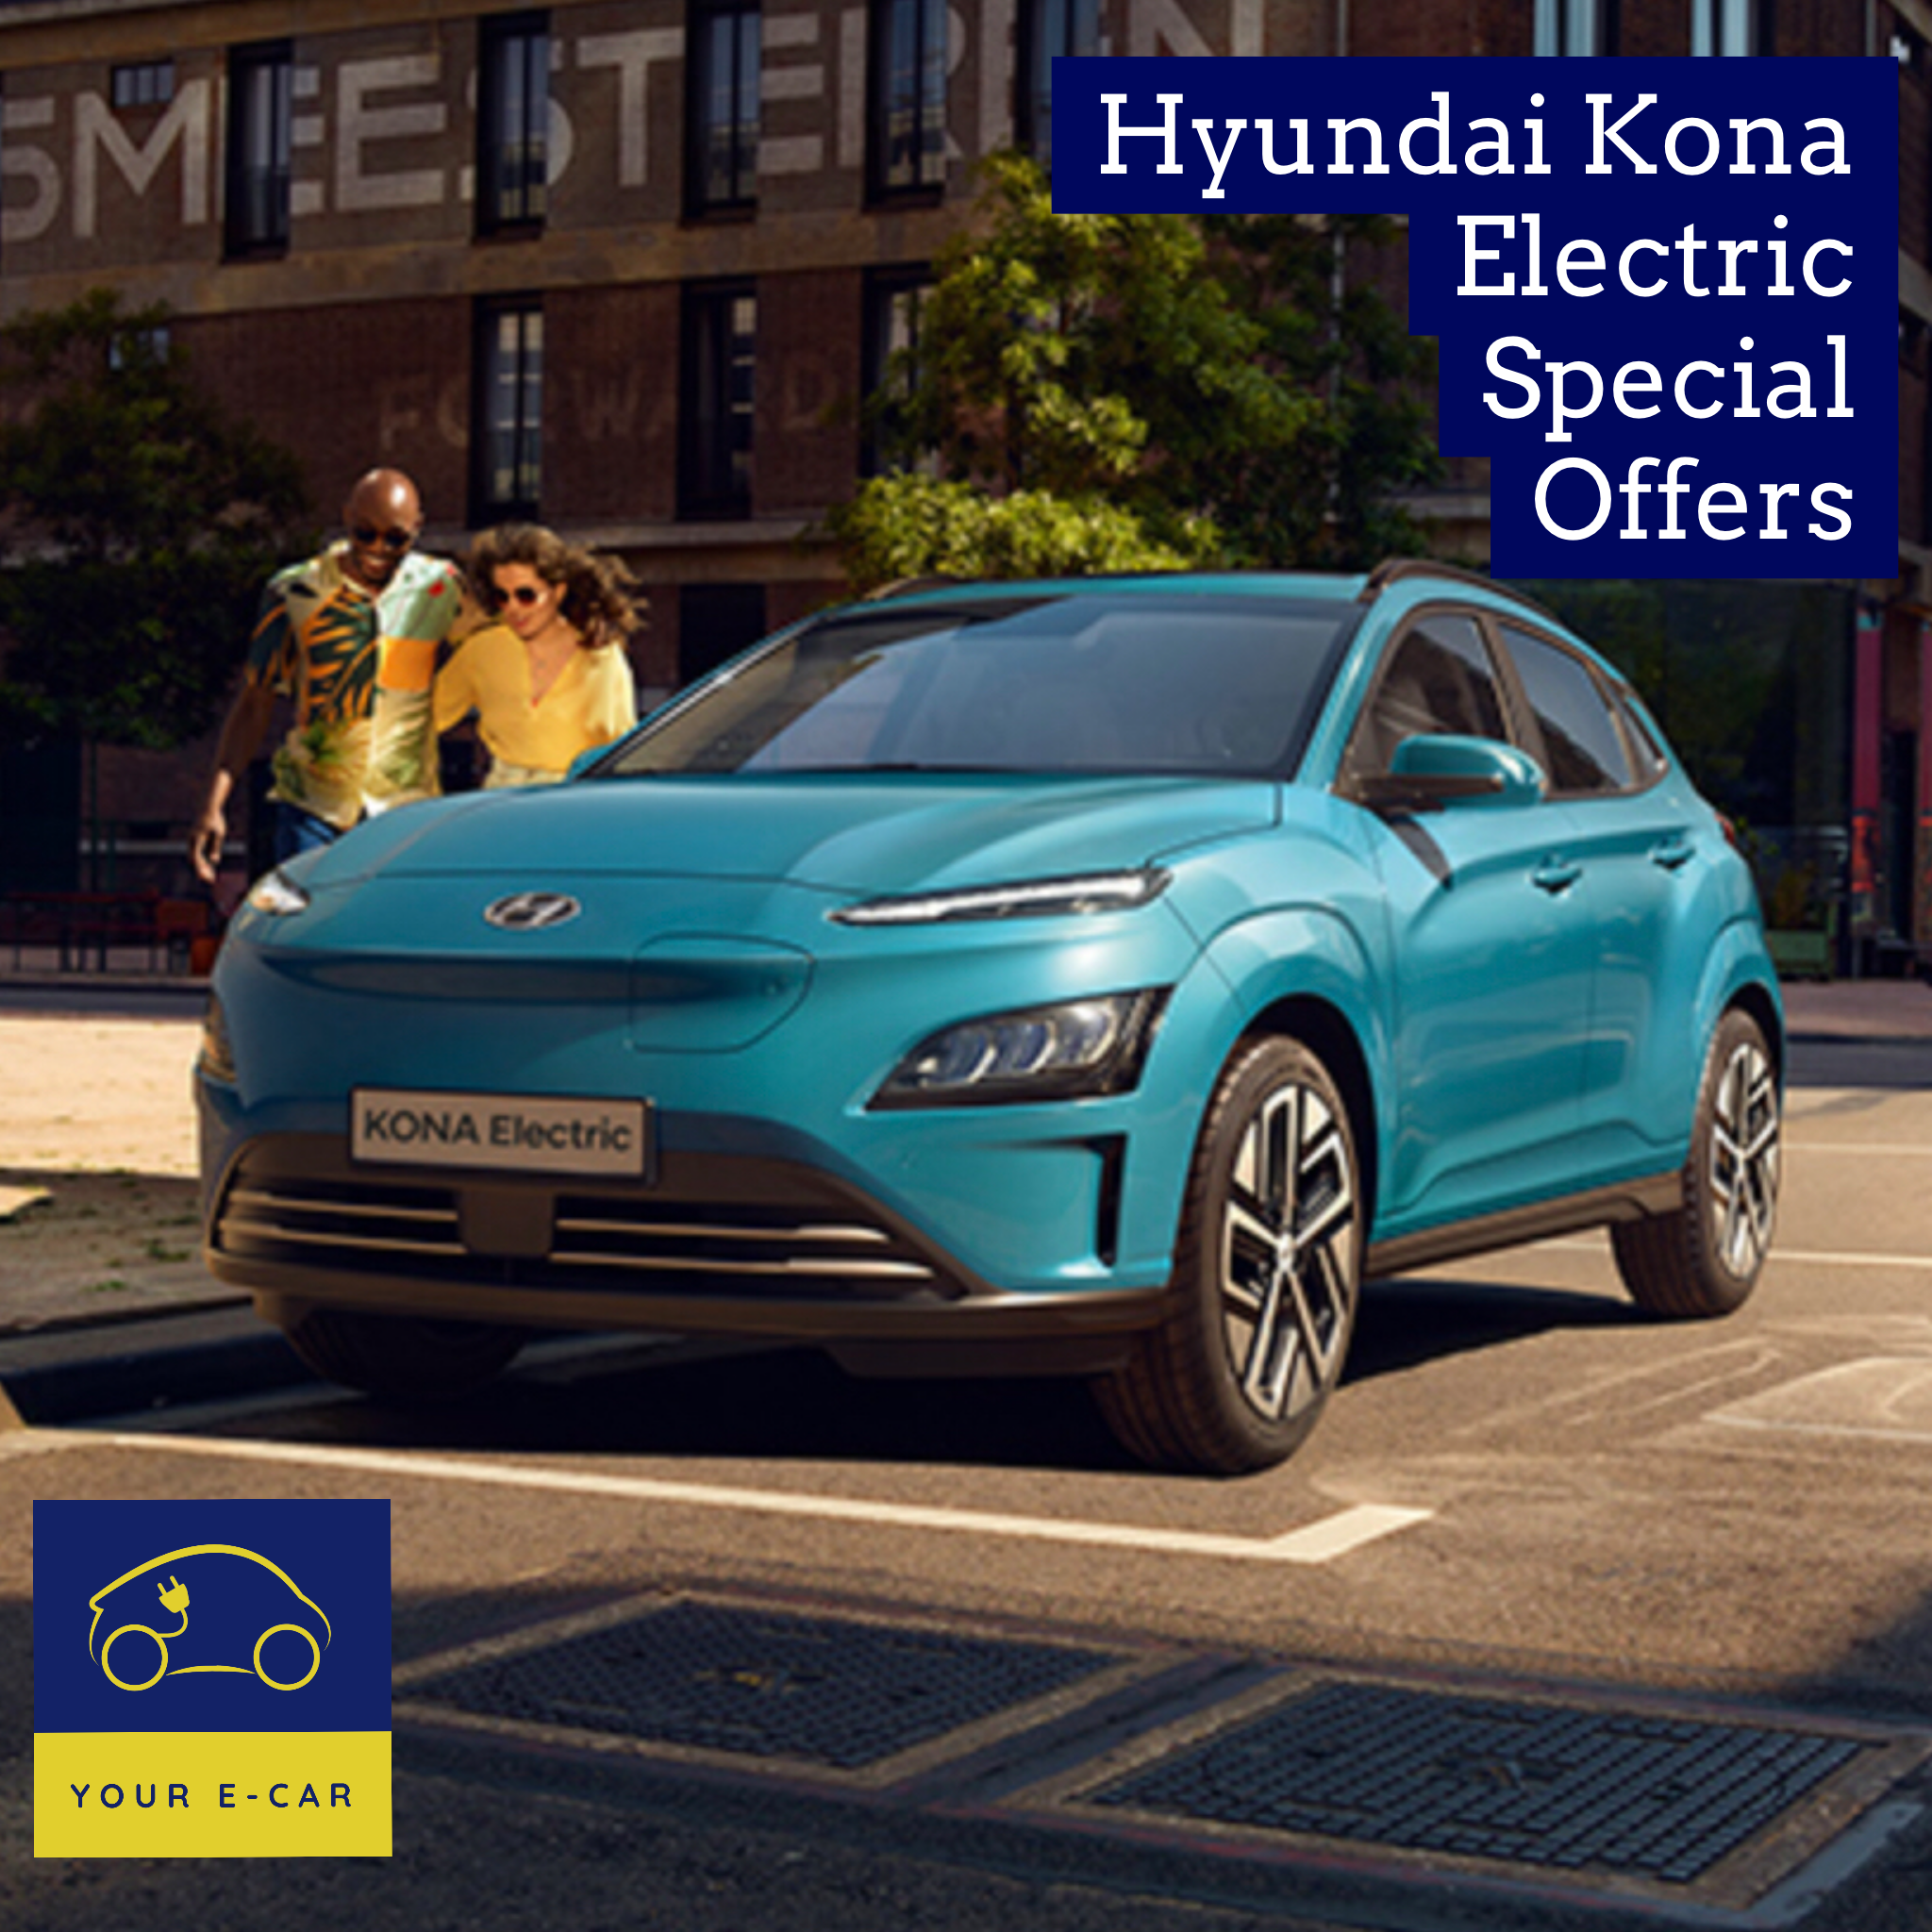 Hyundai Kona Electric Special Offer